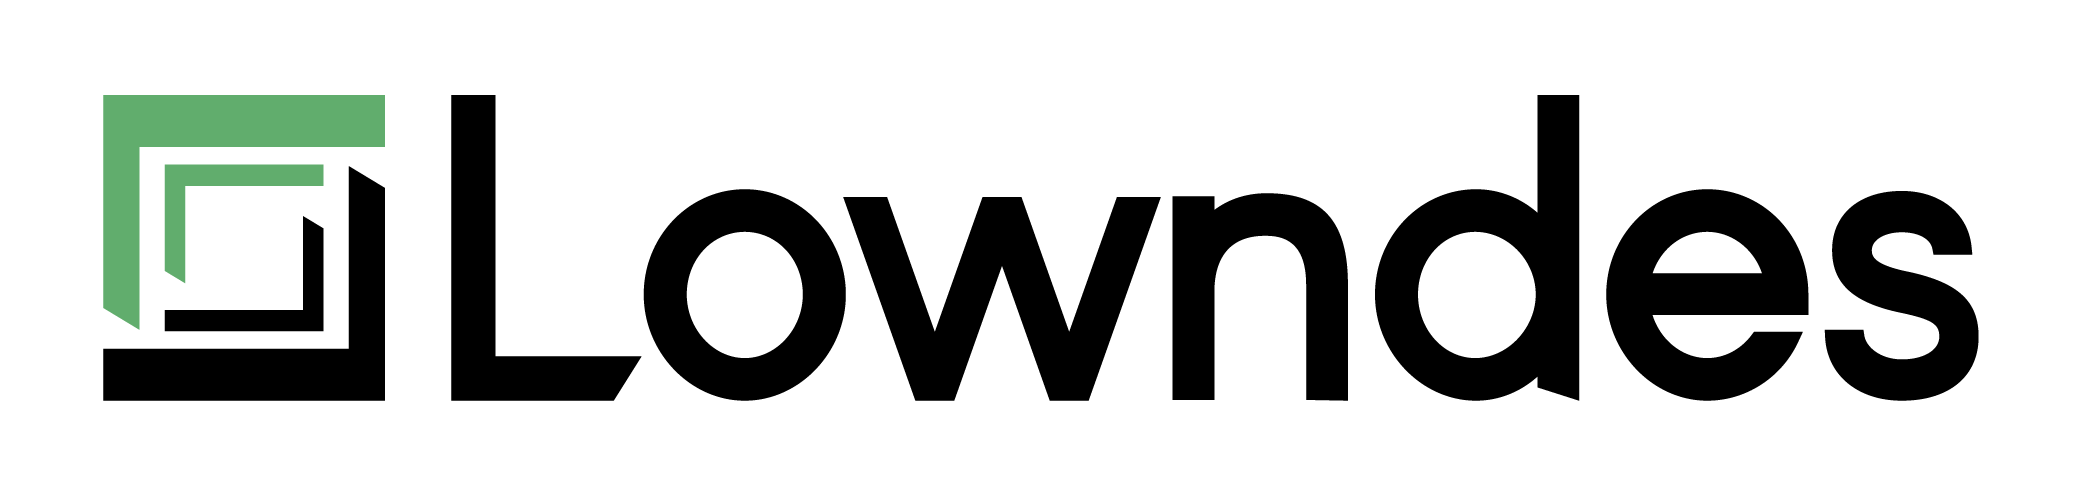 Lowndes logo - final